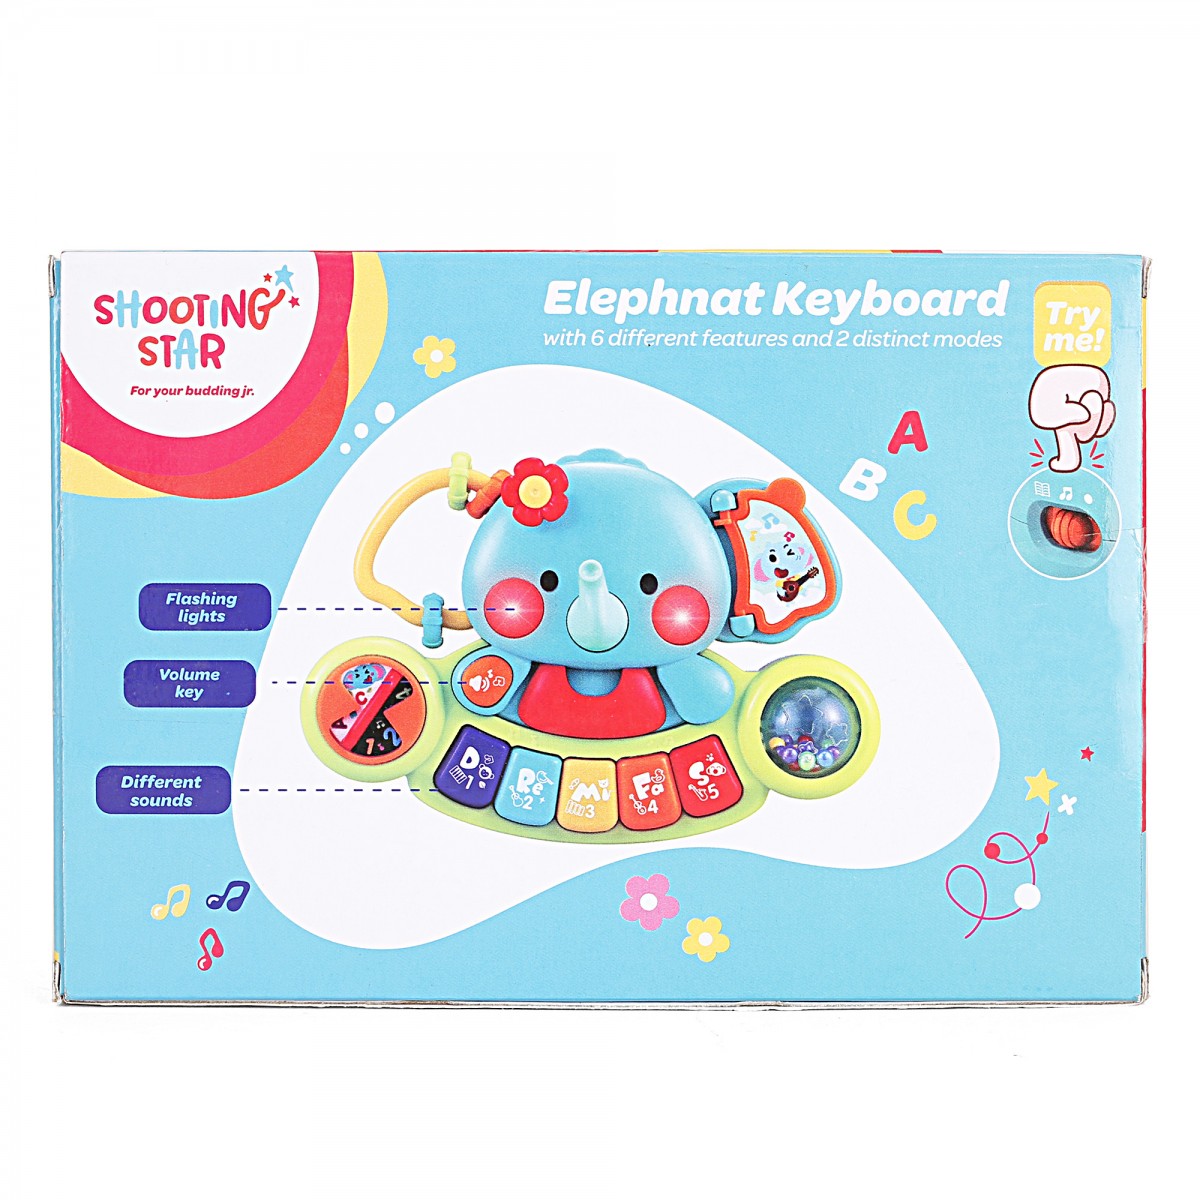 Shooting Star Elephant Keyboard, 6M+, Multicolour